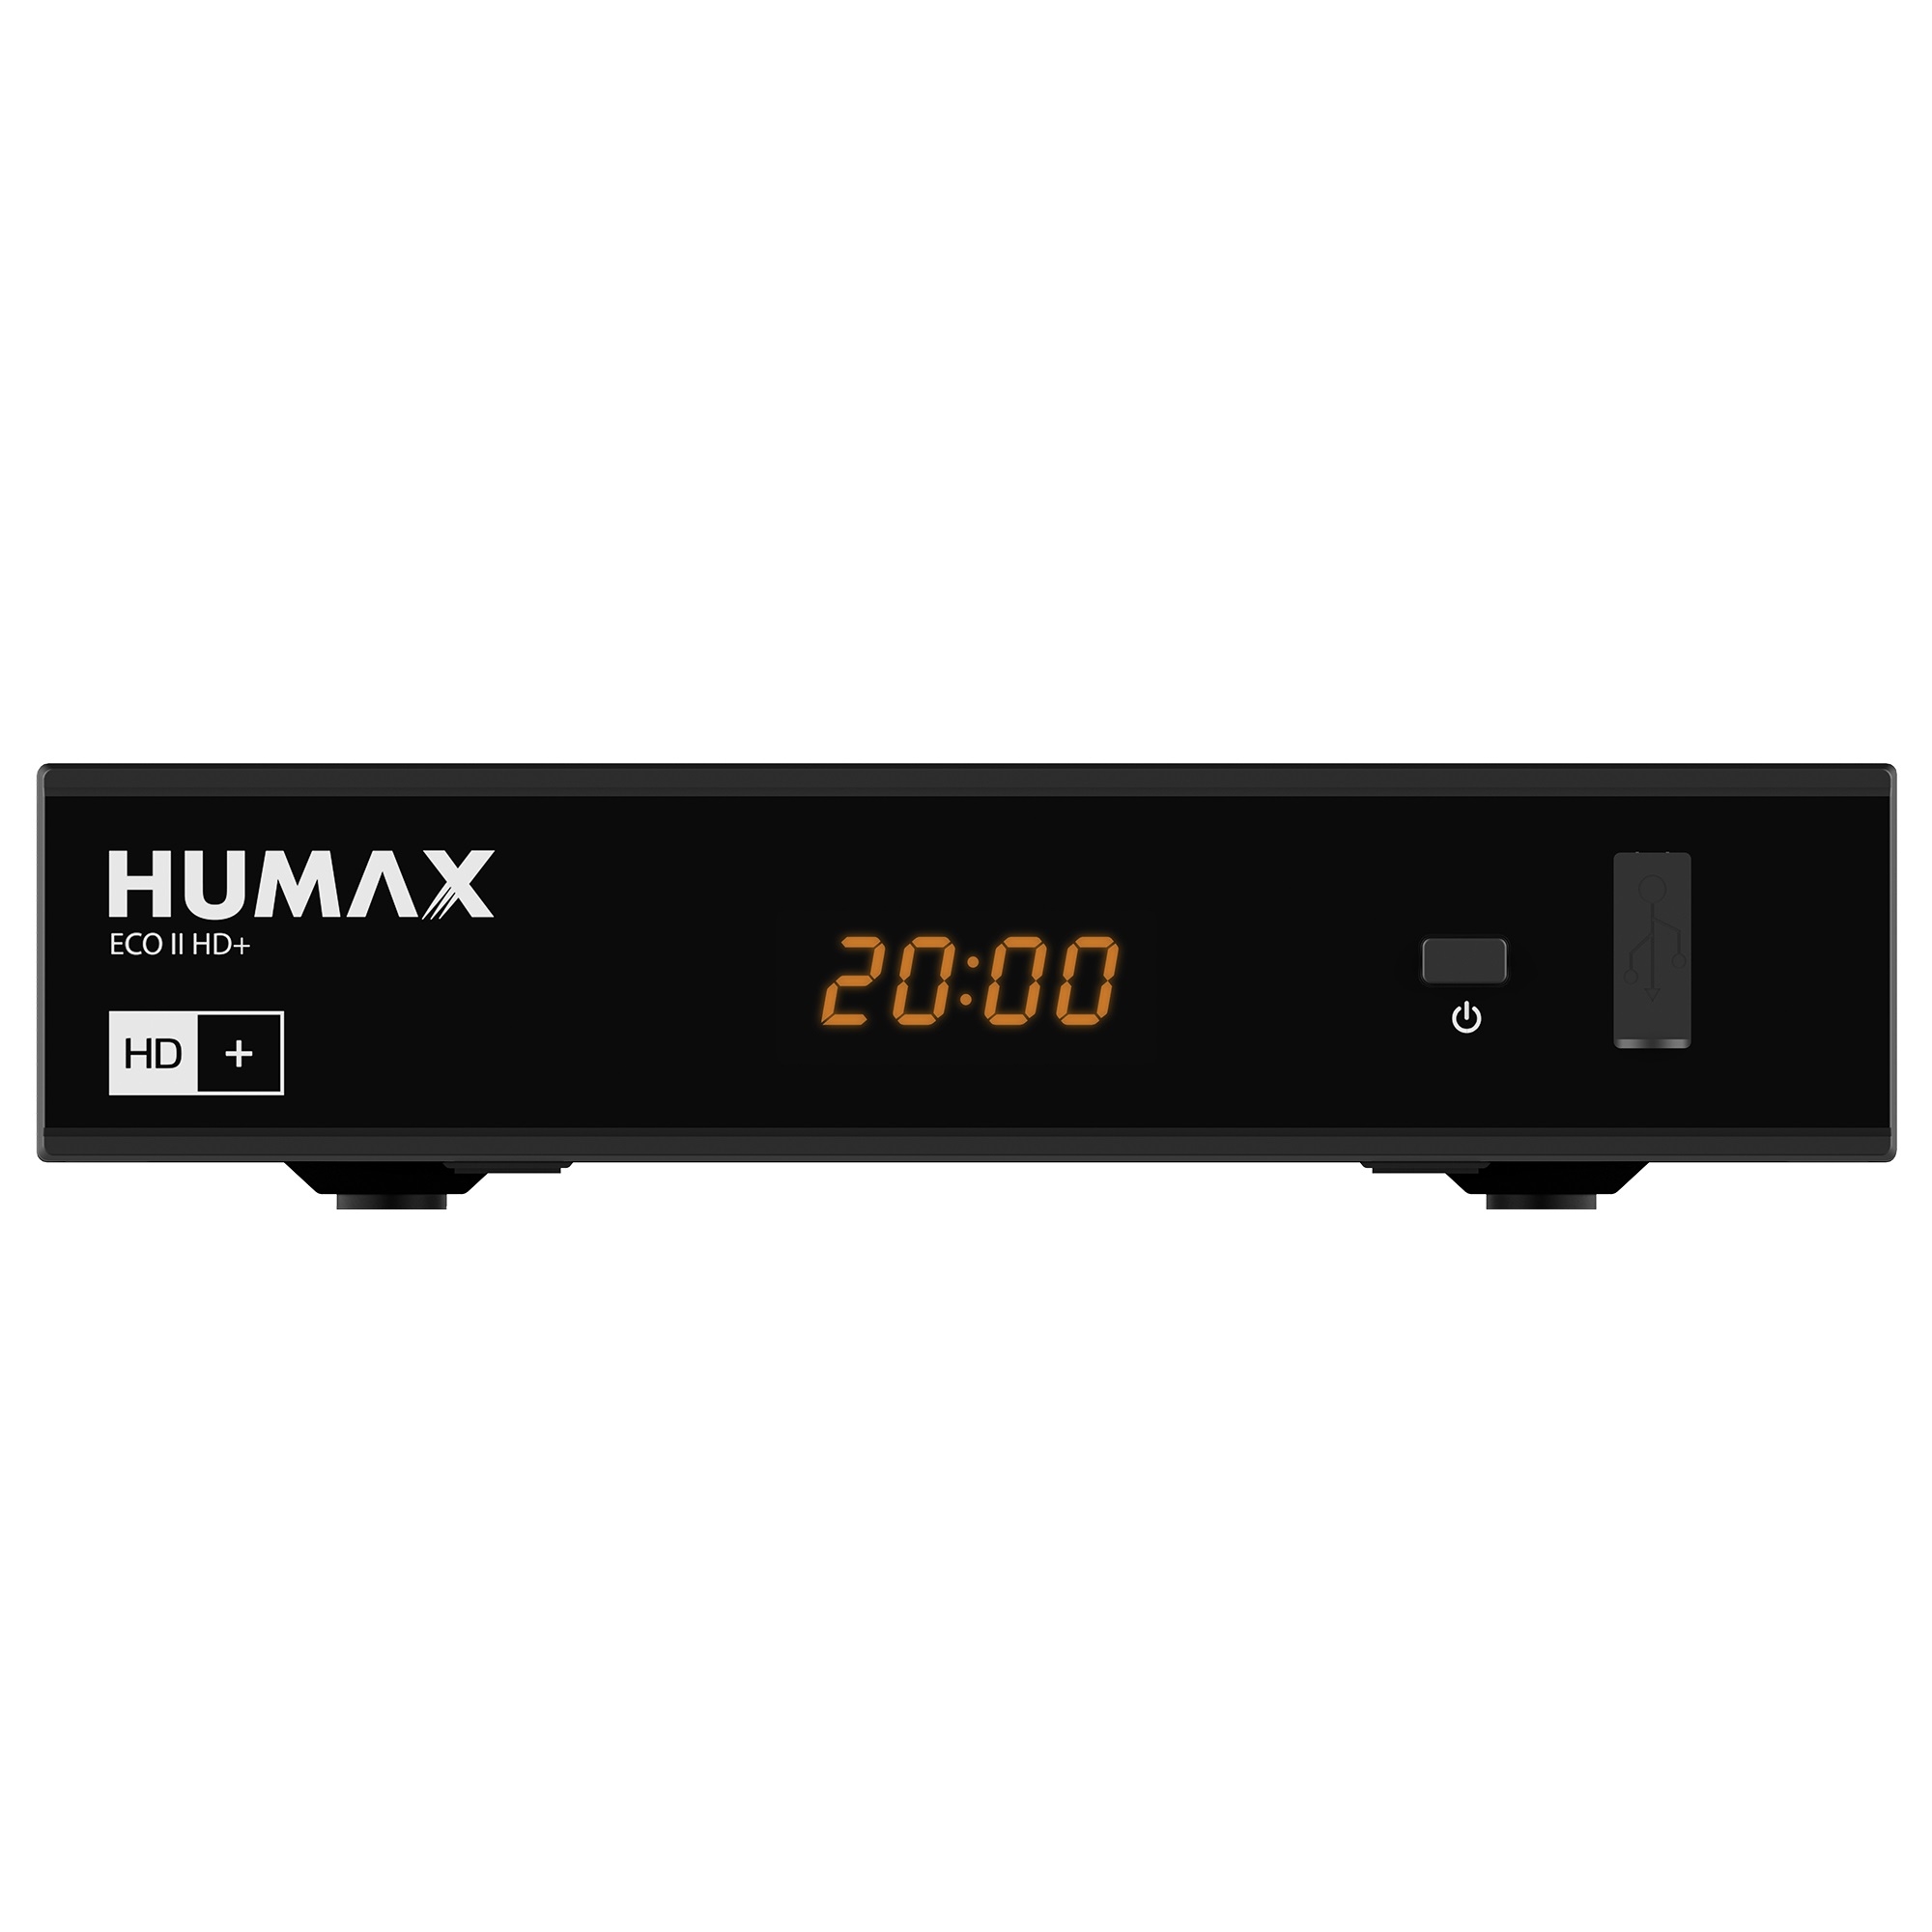 Humax Eco II HD+ HDTV Satellitenreceiver